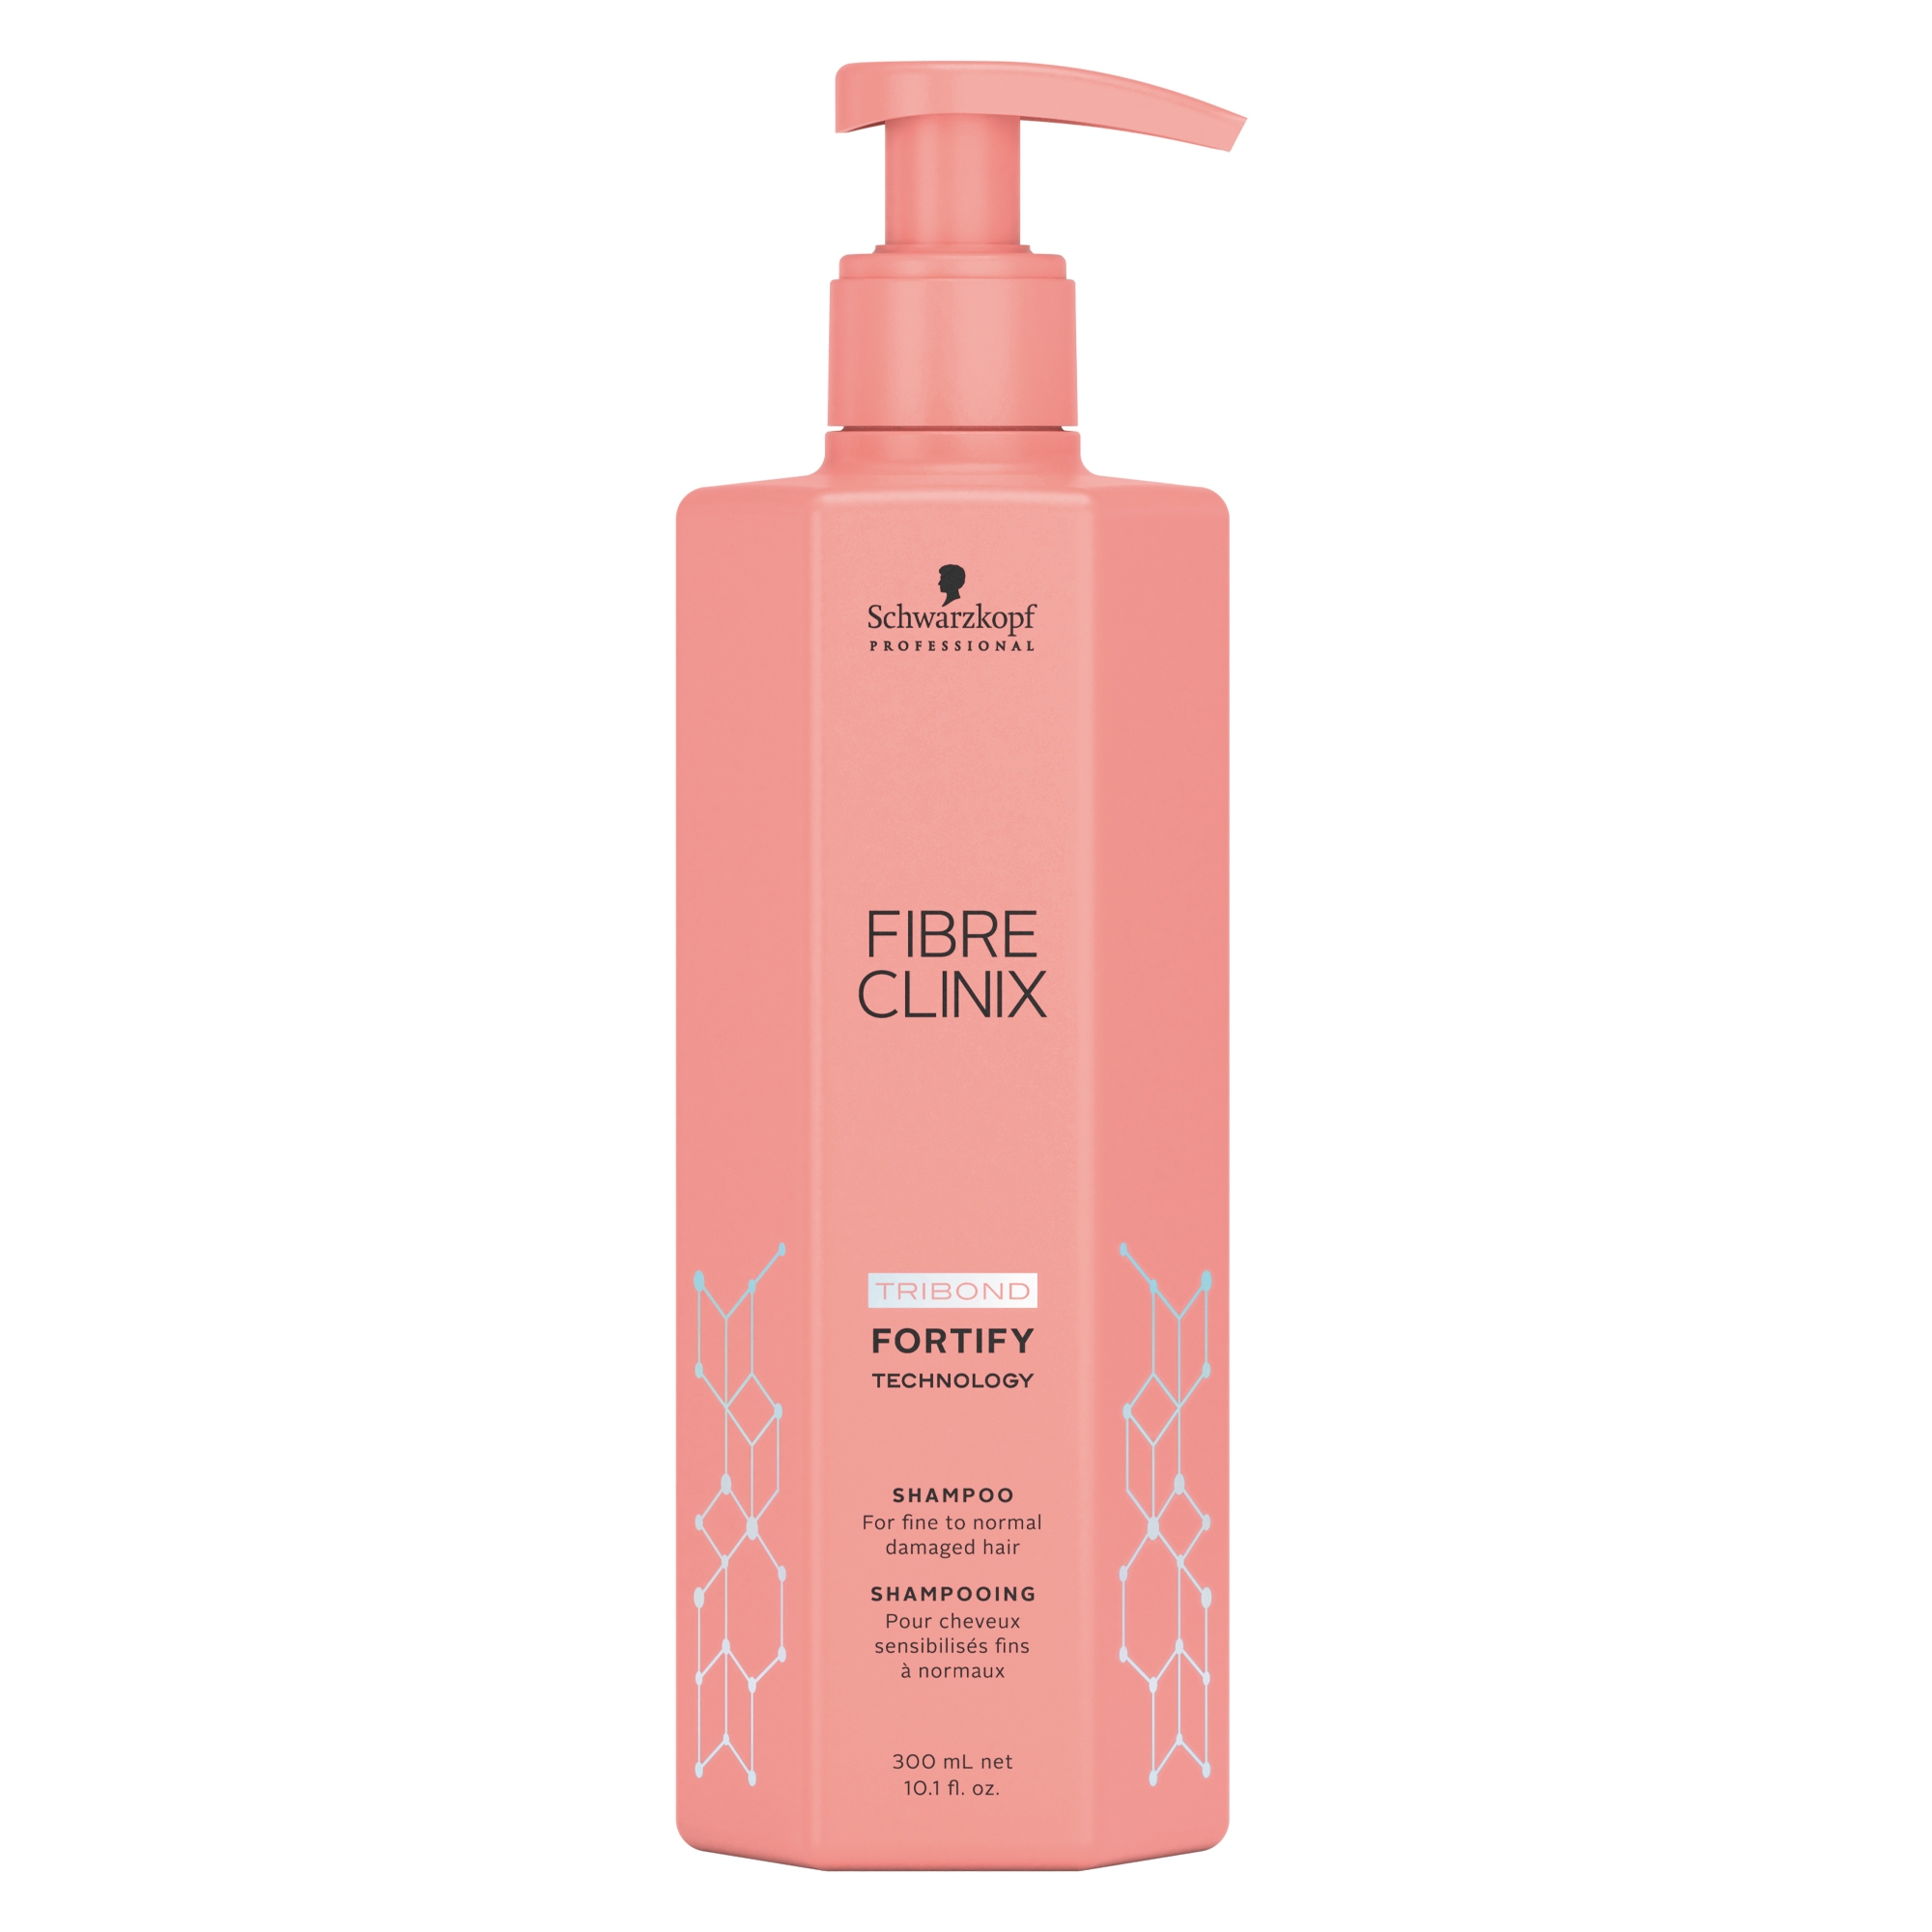 Schwarzkopf FIBRE CLINIX® Fortify Shampoo